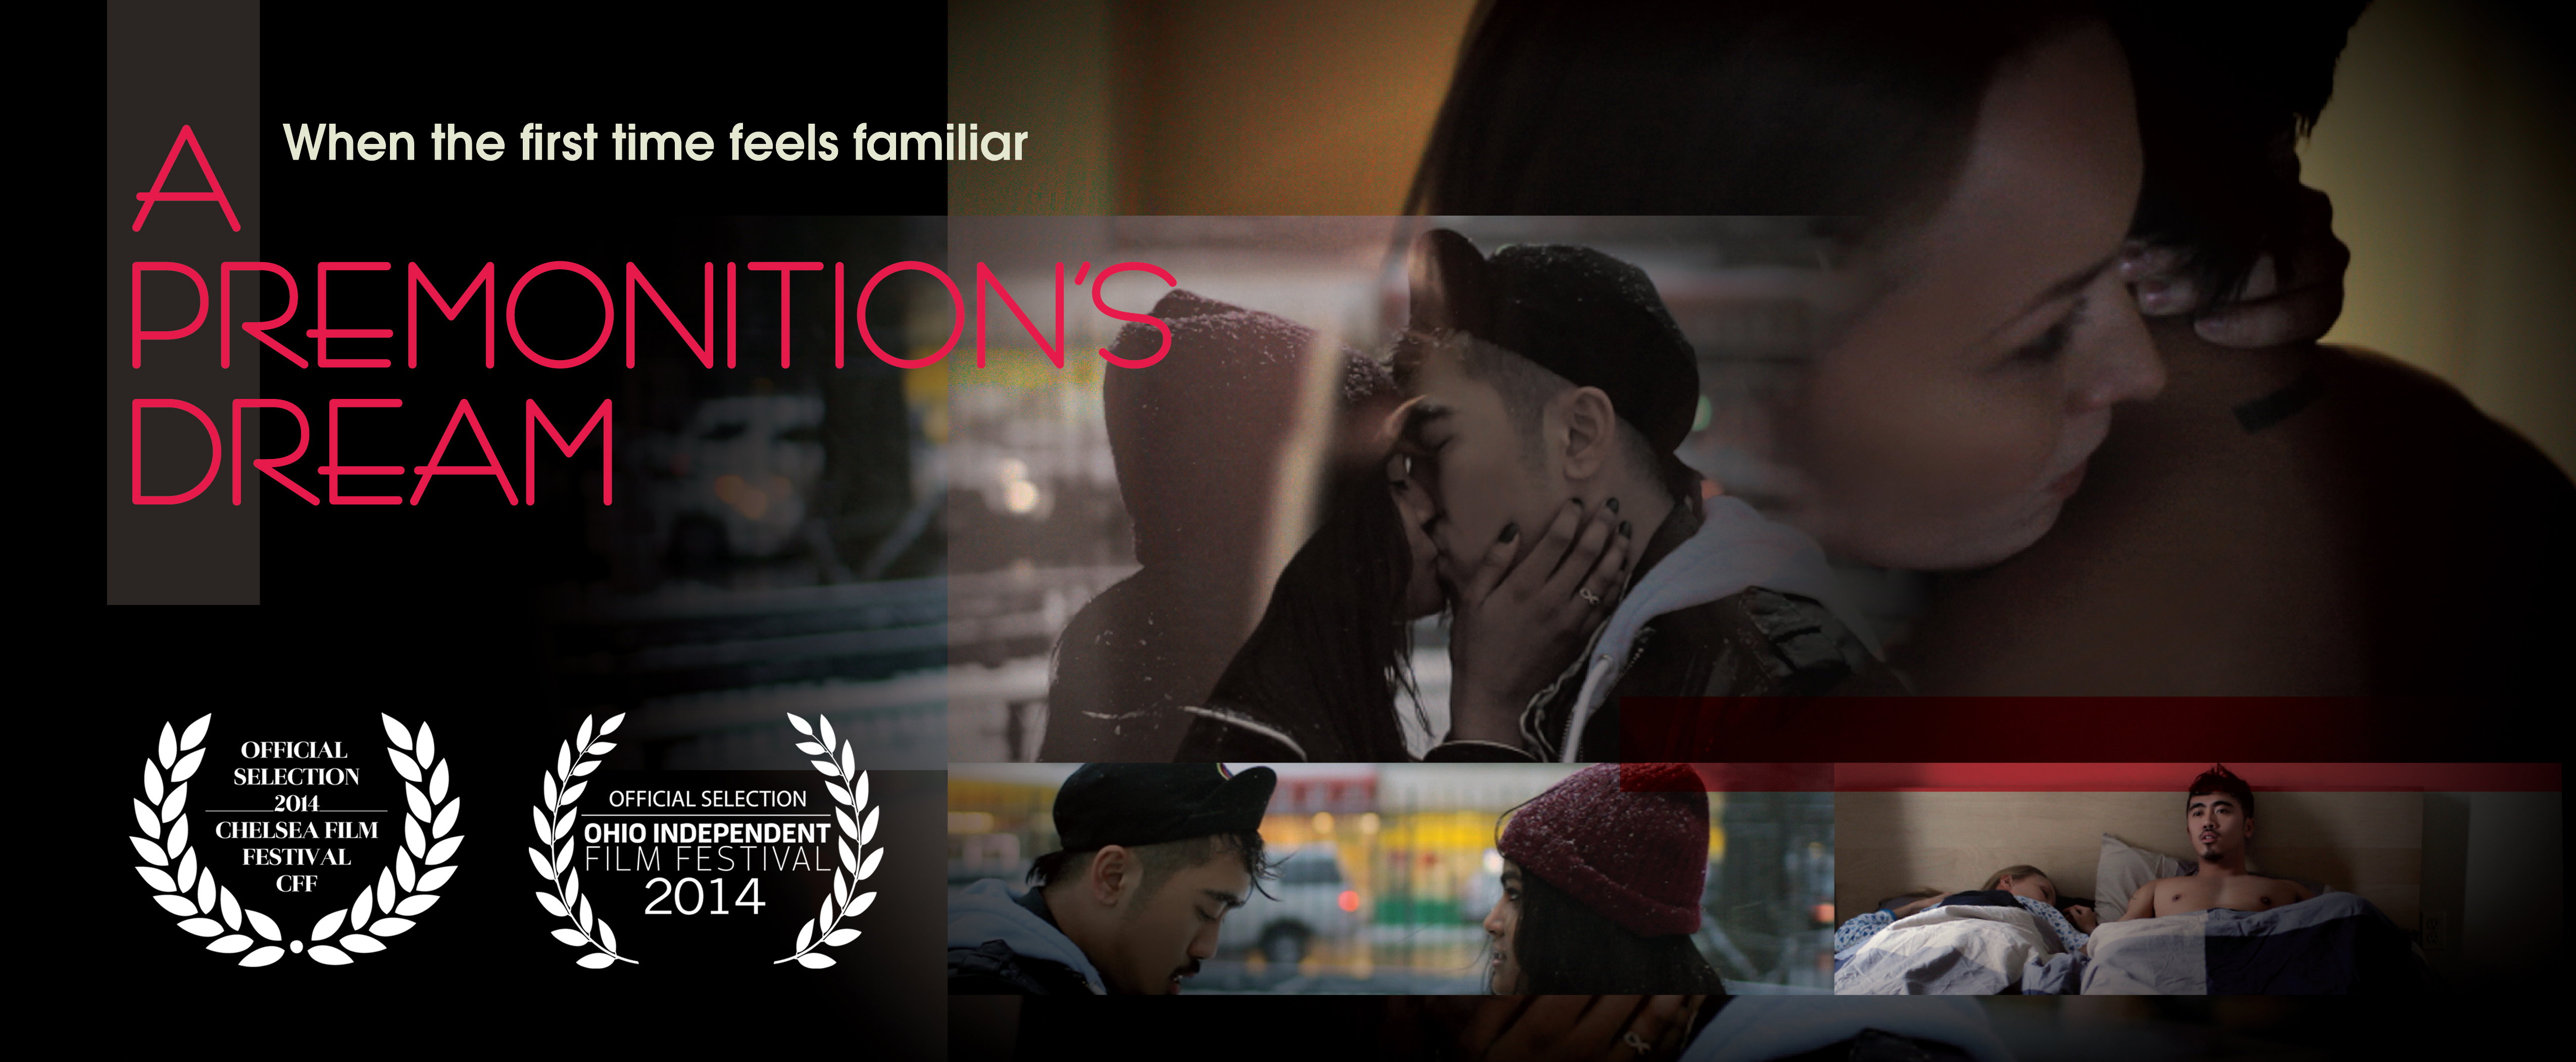 2014 A Premonition's Dream (Short Film) Official Selection of Chelsea Film Festival & Ohio Independent Film Festival